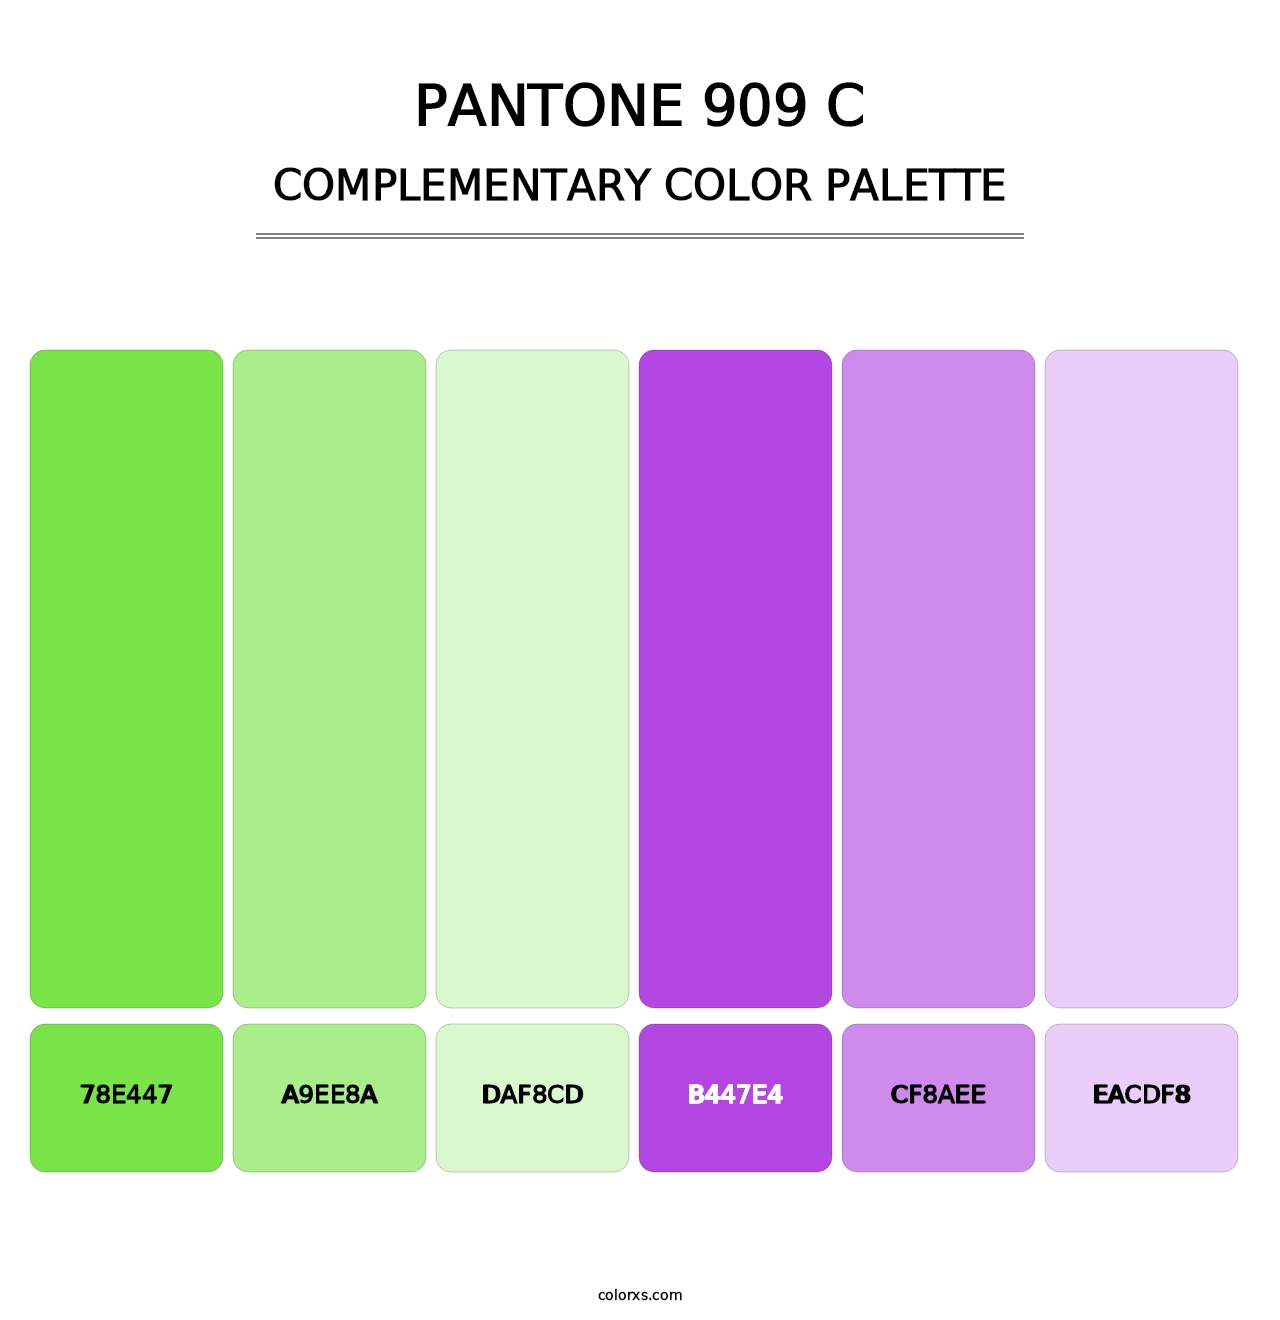 PANTONE 909 C - Complementary Color Palette